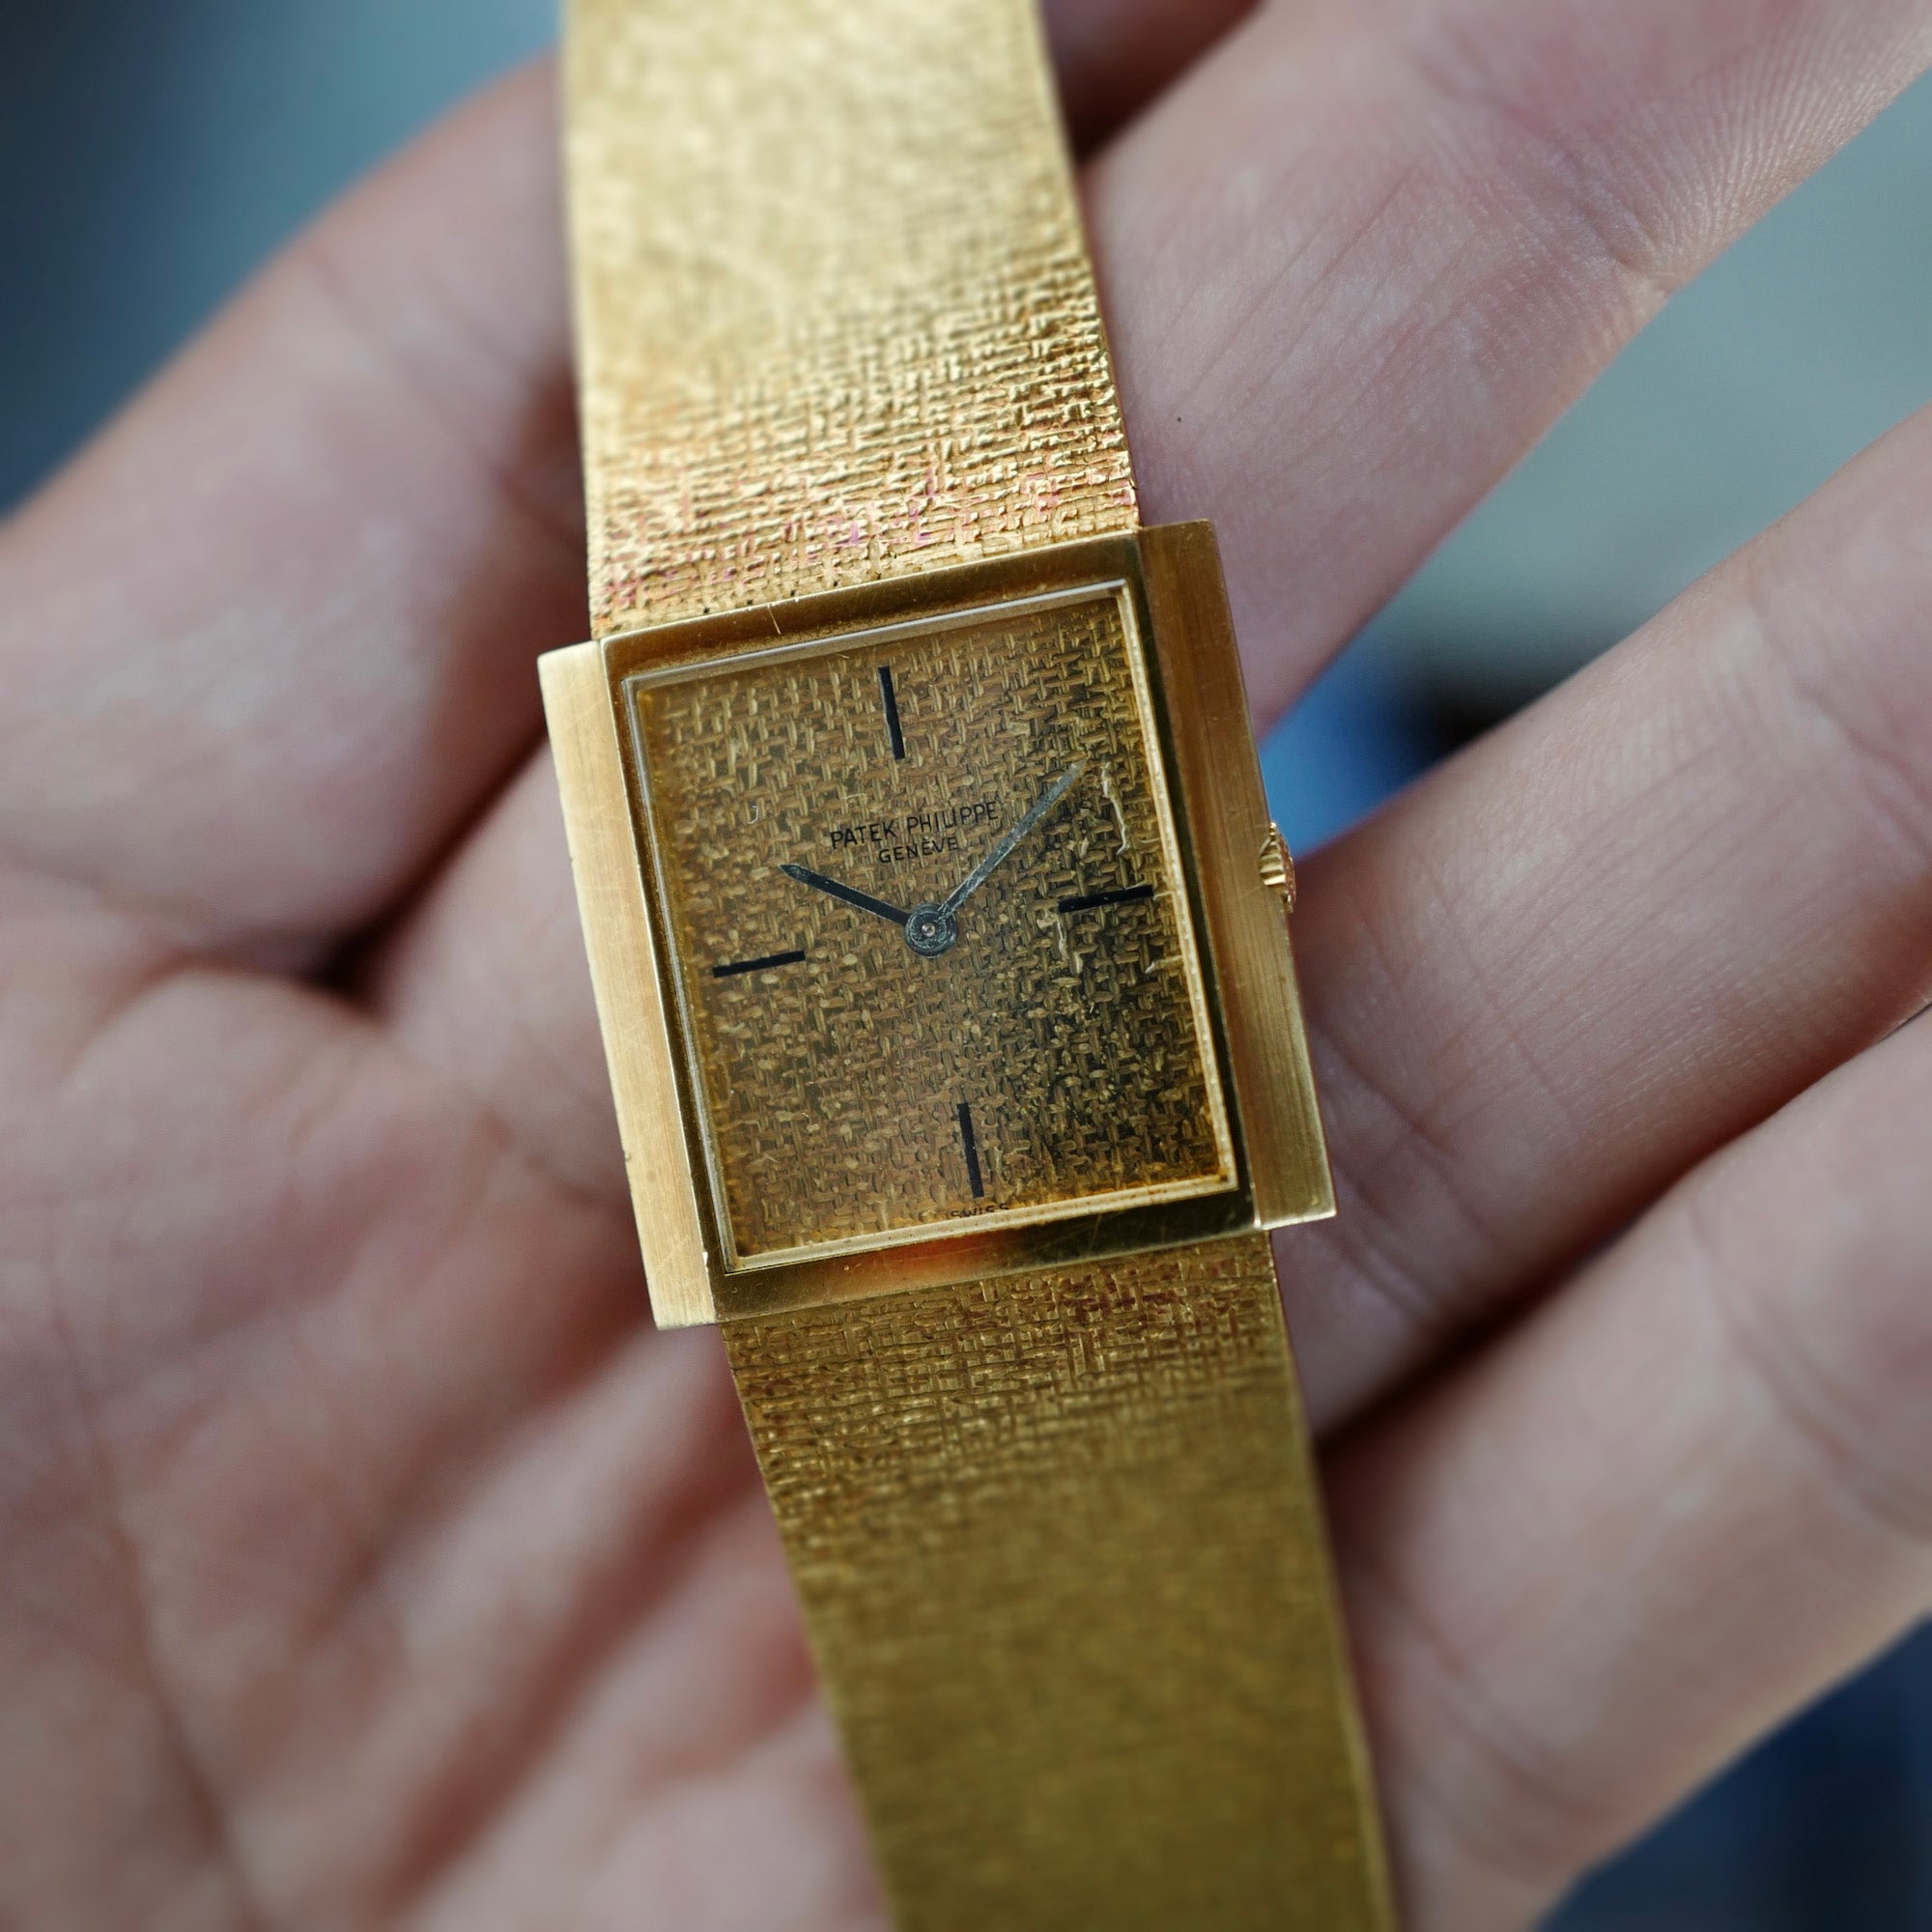 Patek Philippe - Patek Philippe Yellow Gold Bracelet Watch Ref. 3491 - The Keystone Watches